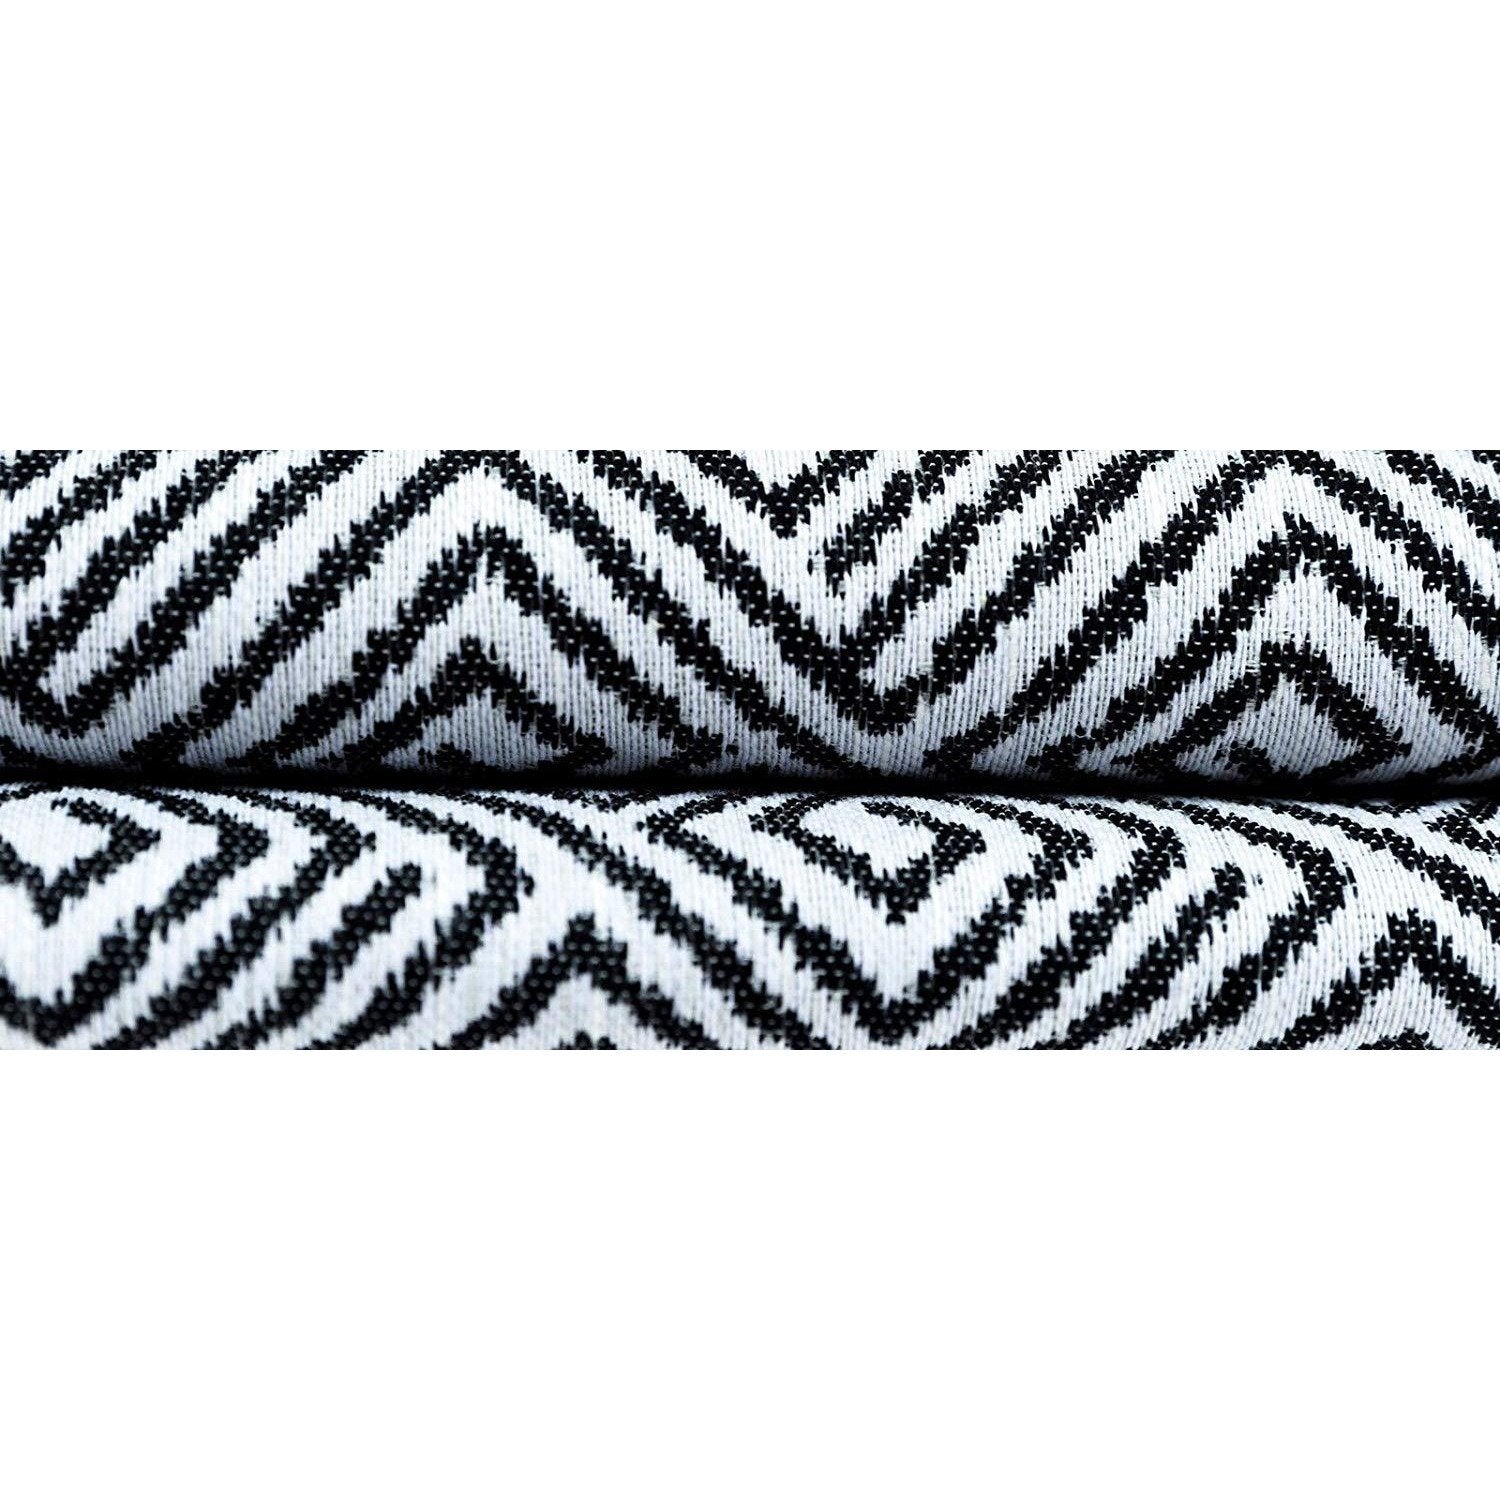 McAlister Textiles Aztec Geometric Black + White 43cm x 43cm Cushion Sets Cushions and Covers 